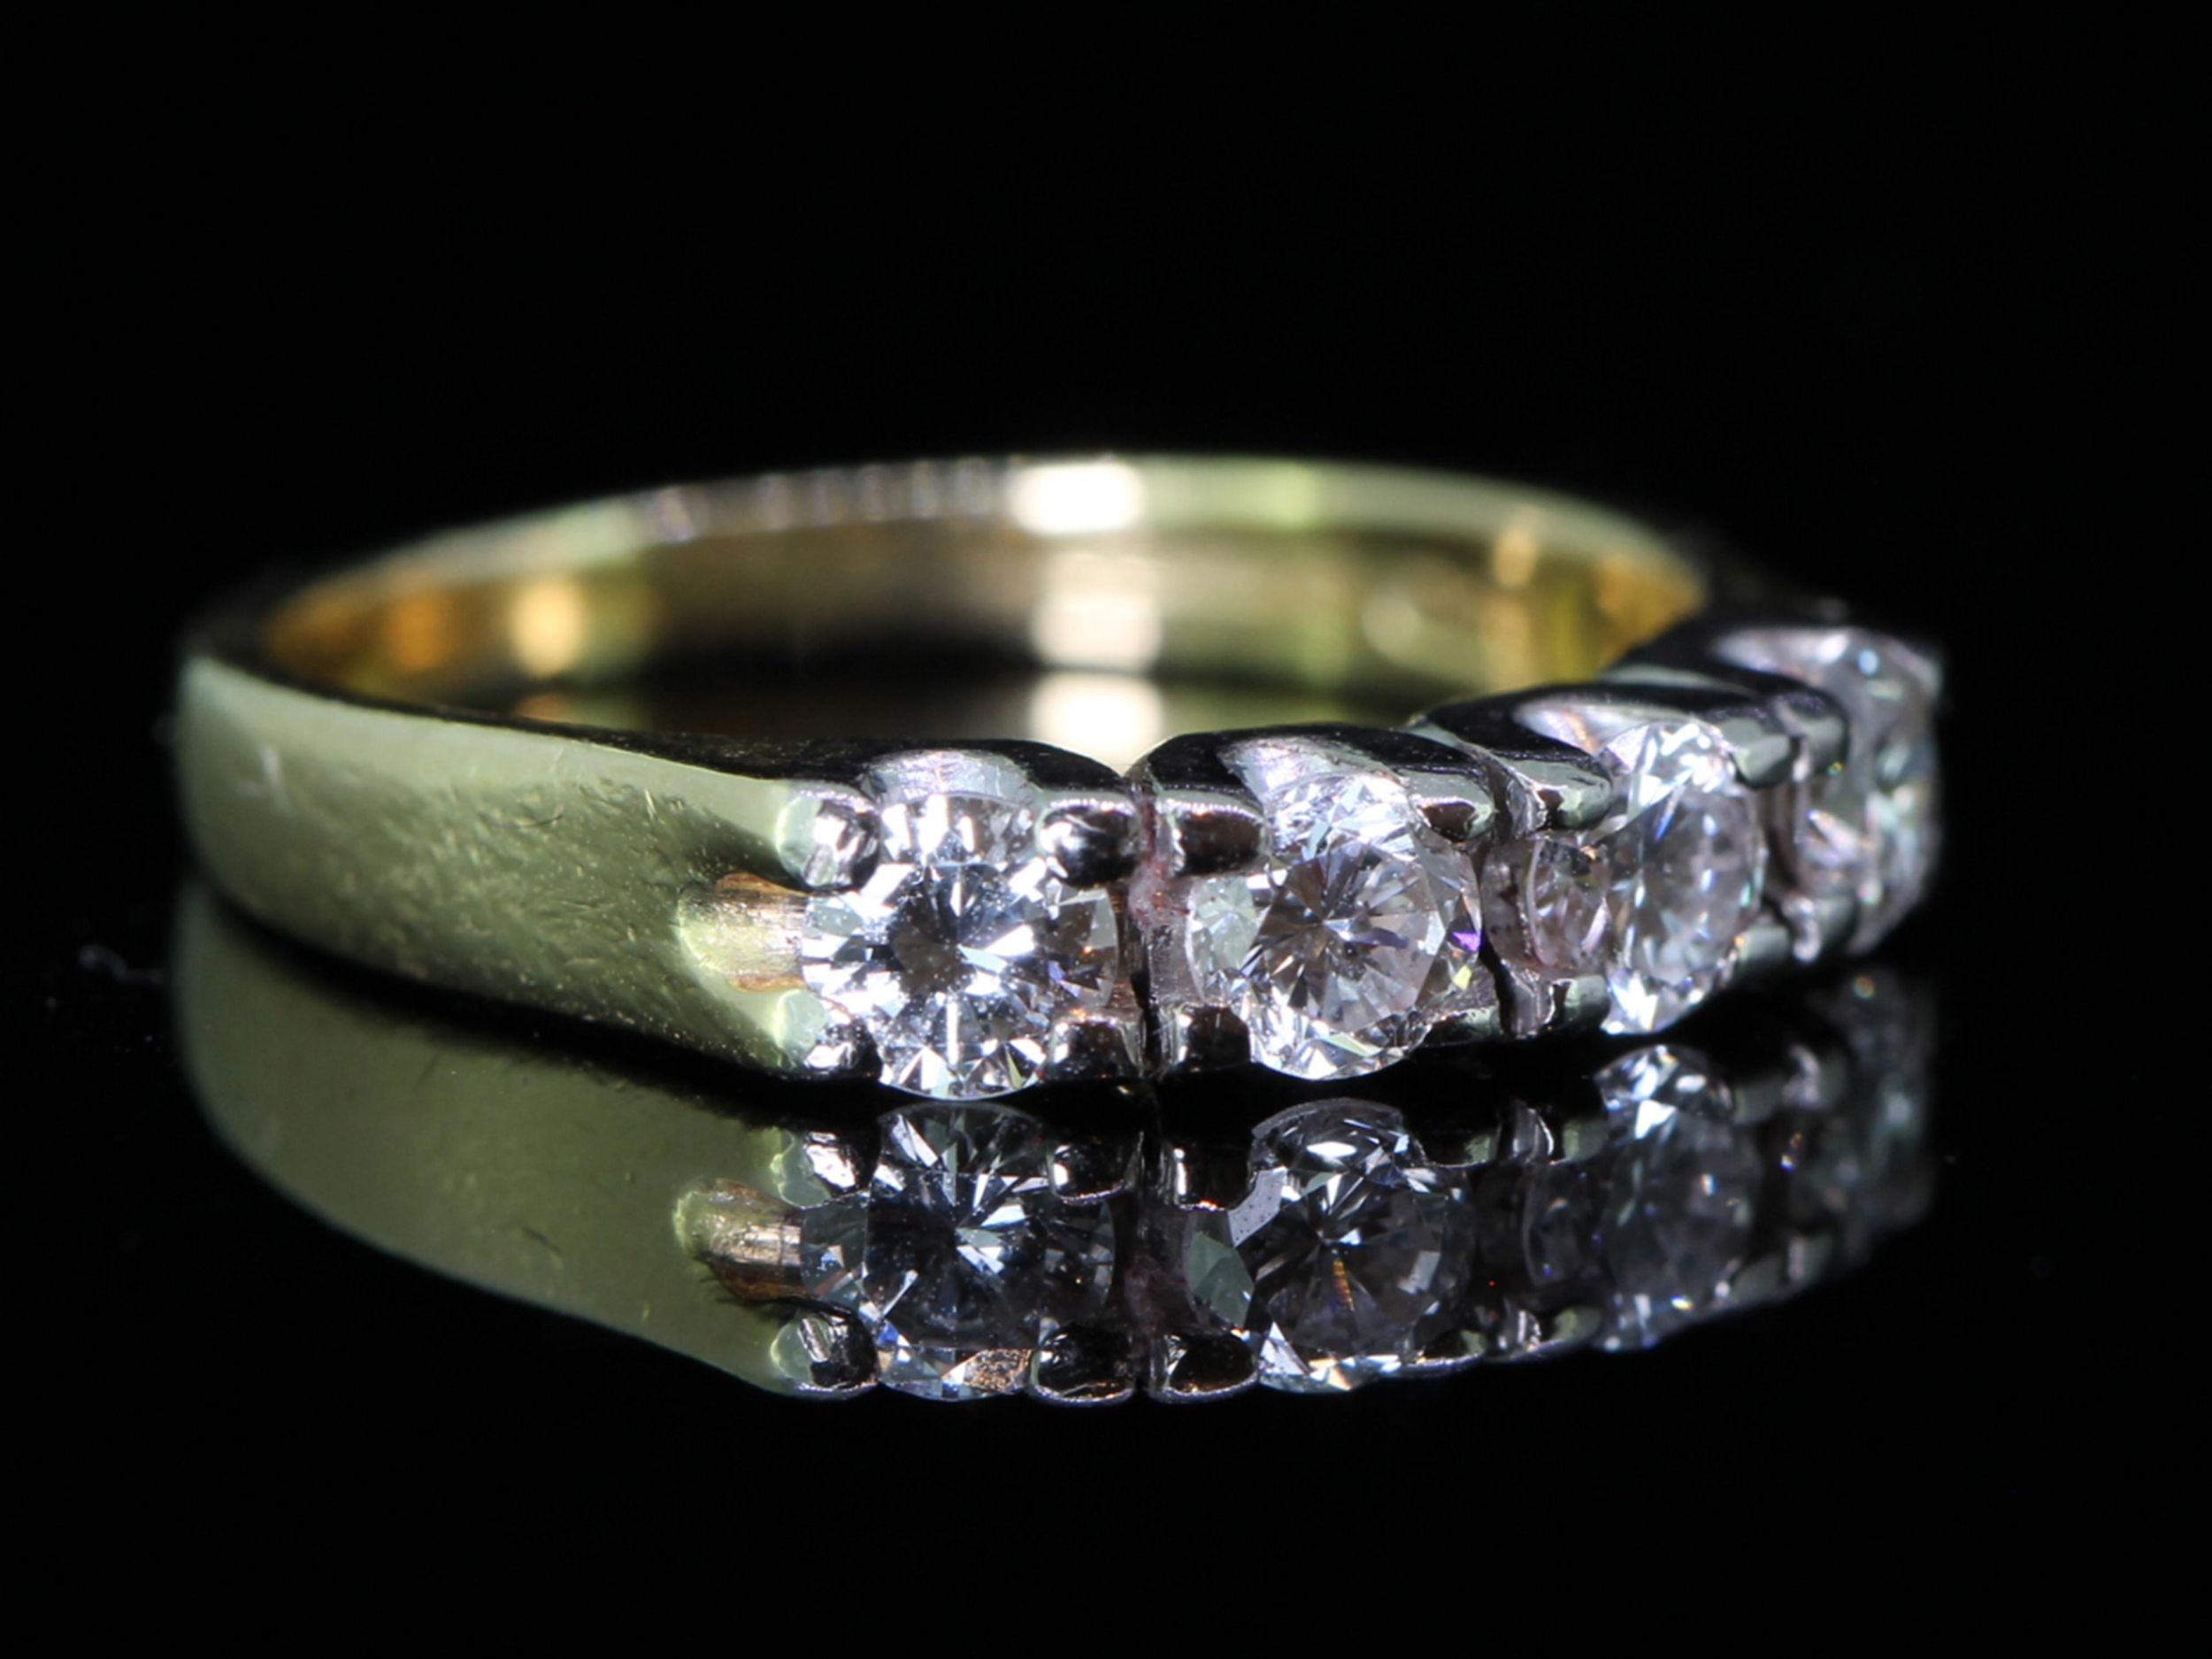 Four Stone Diamond 18 Carat Gold Half Eternity Ring